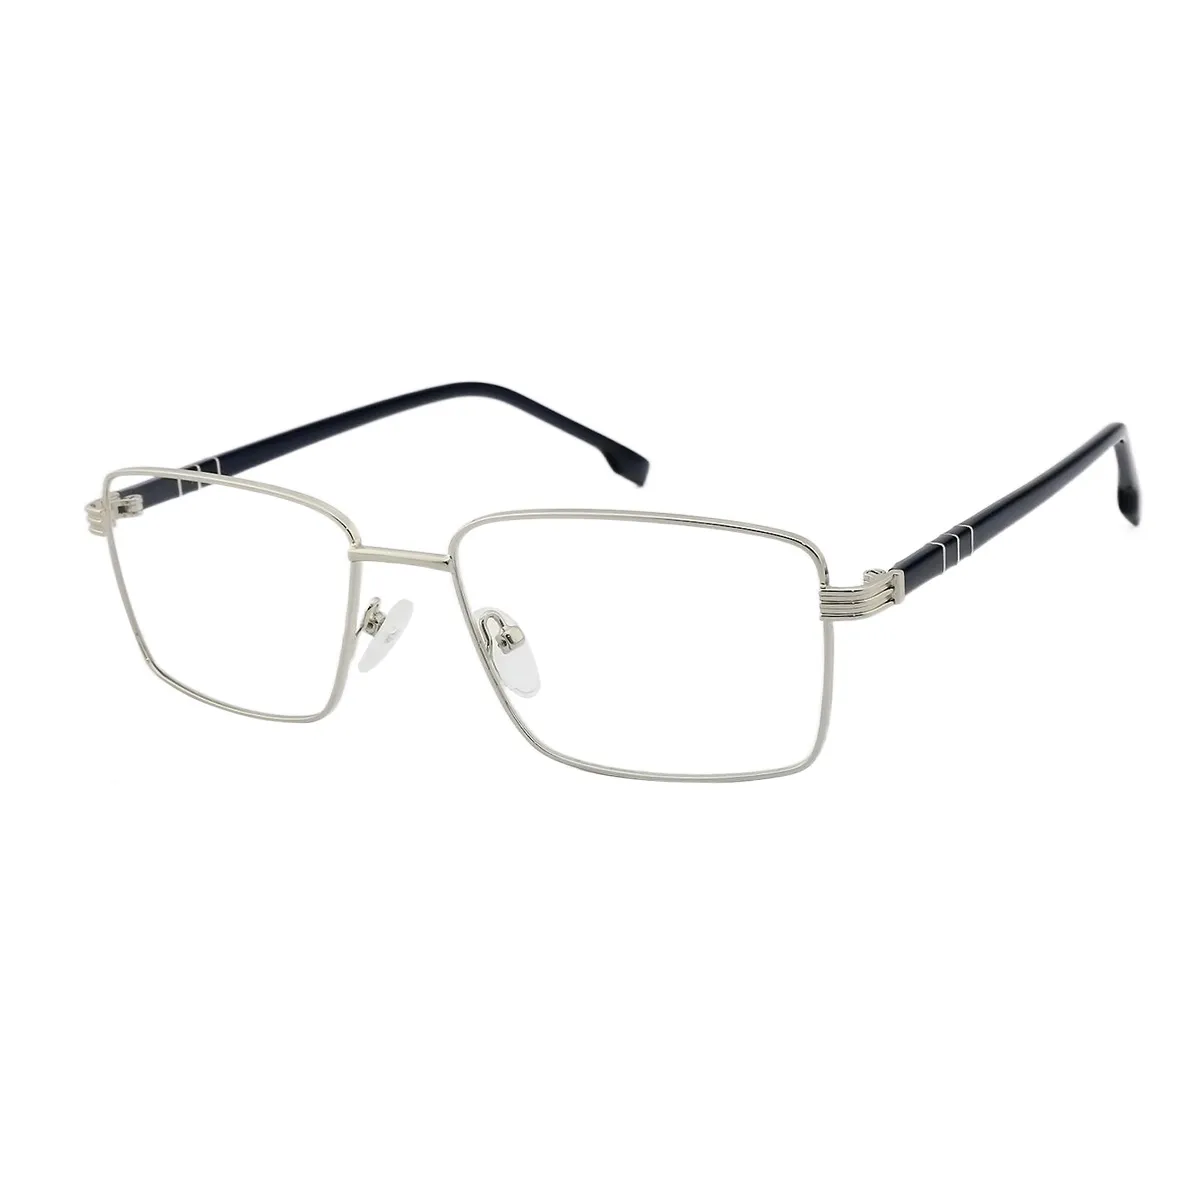 Alden - Square Silver Glasses for Men